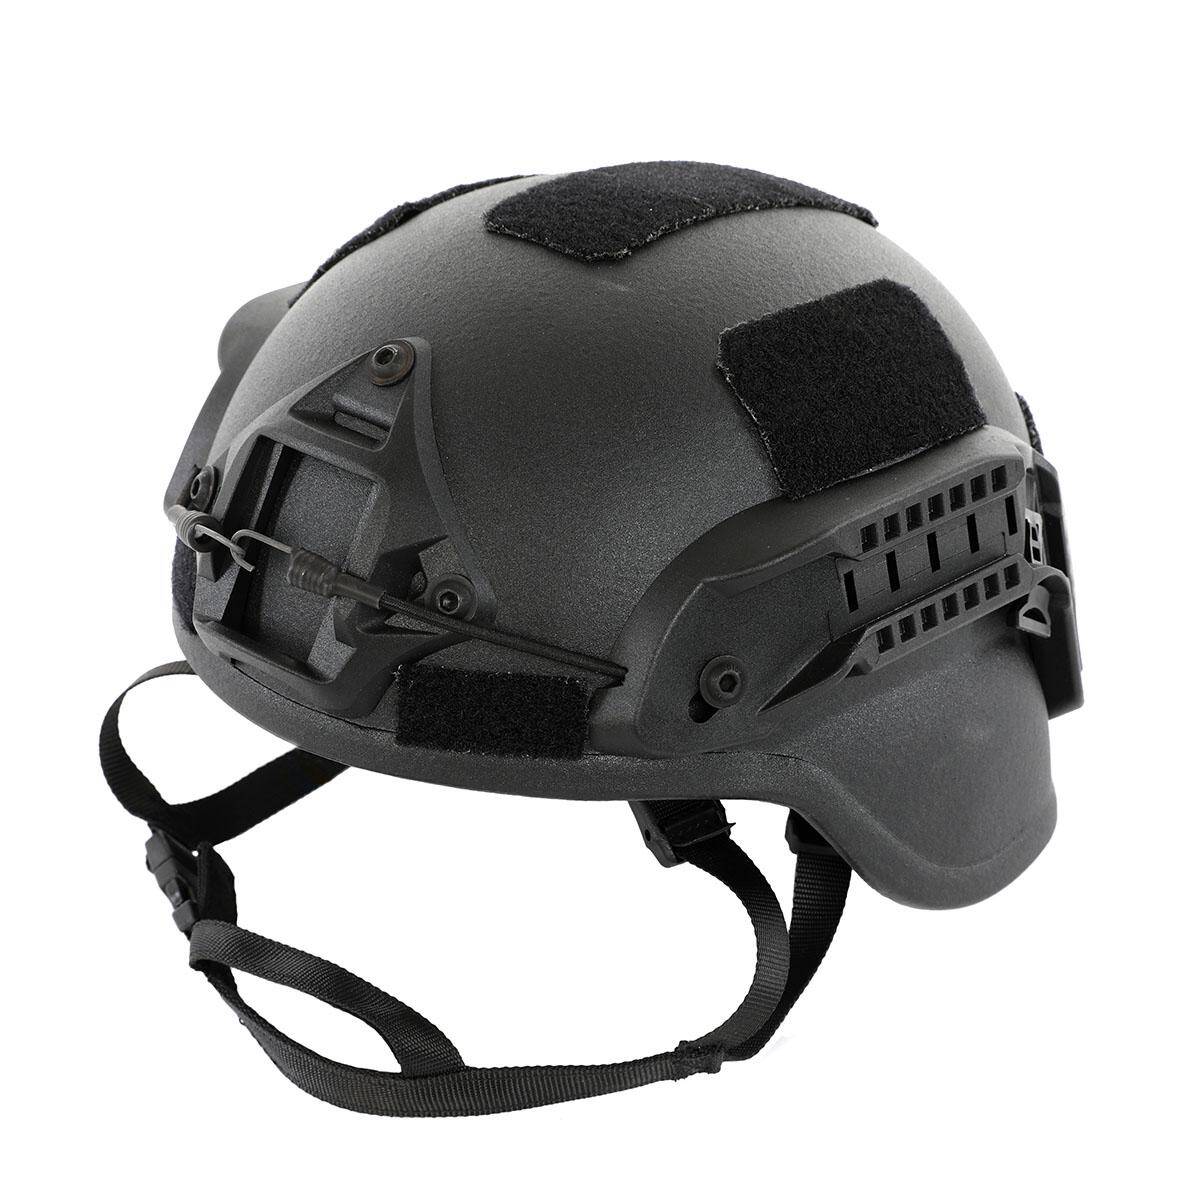 PGD Helmet MICH with ARC Rails